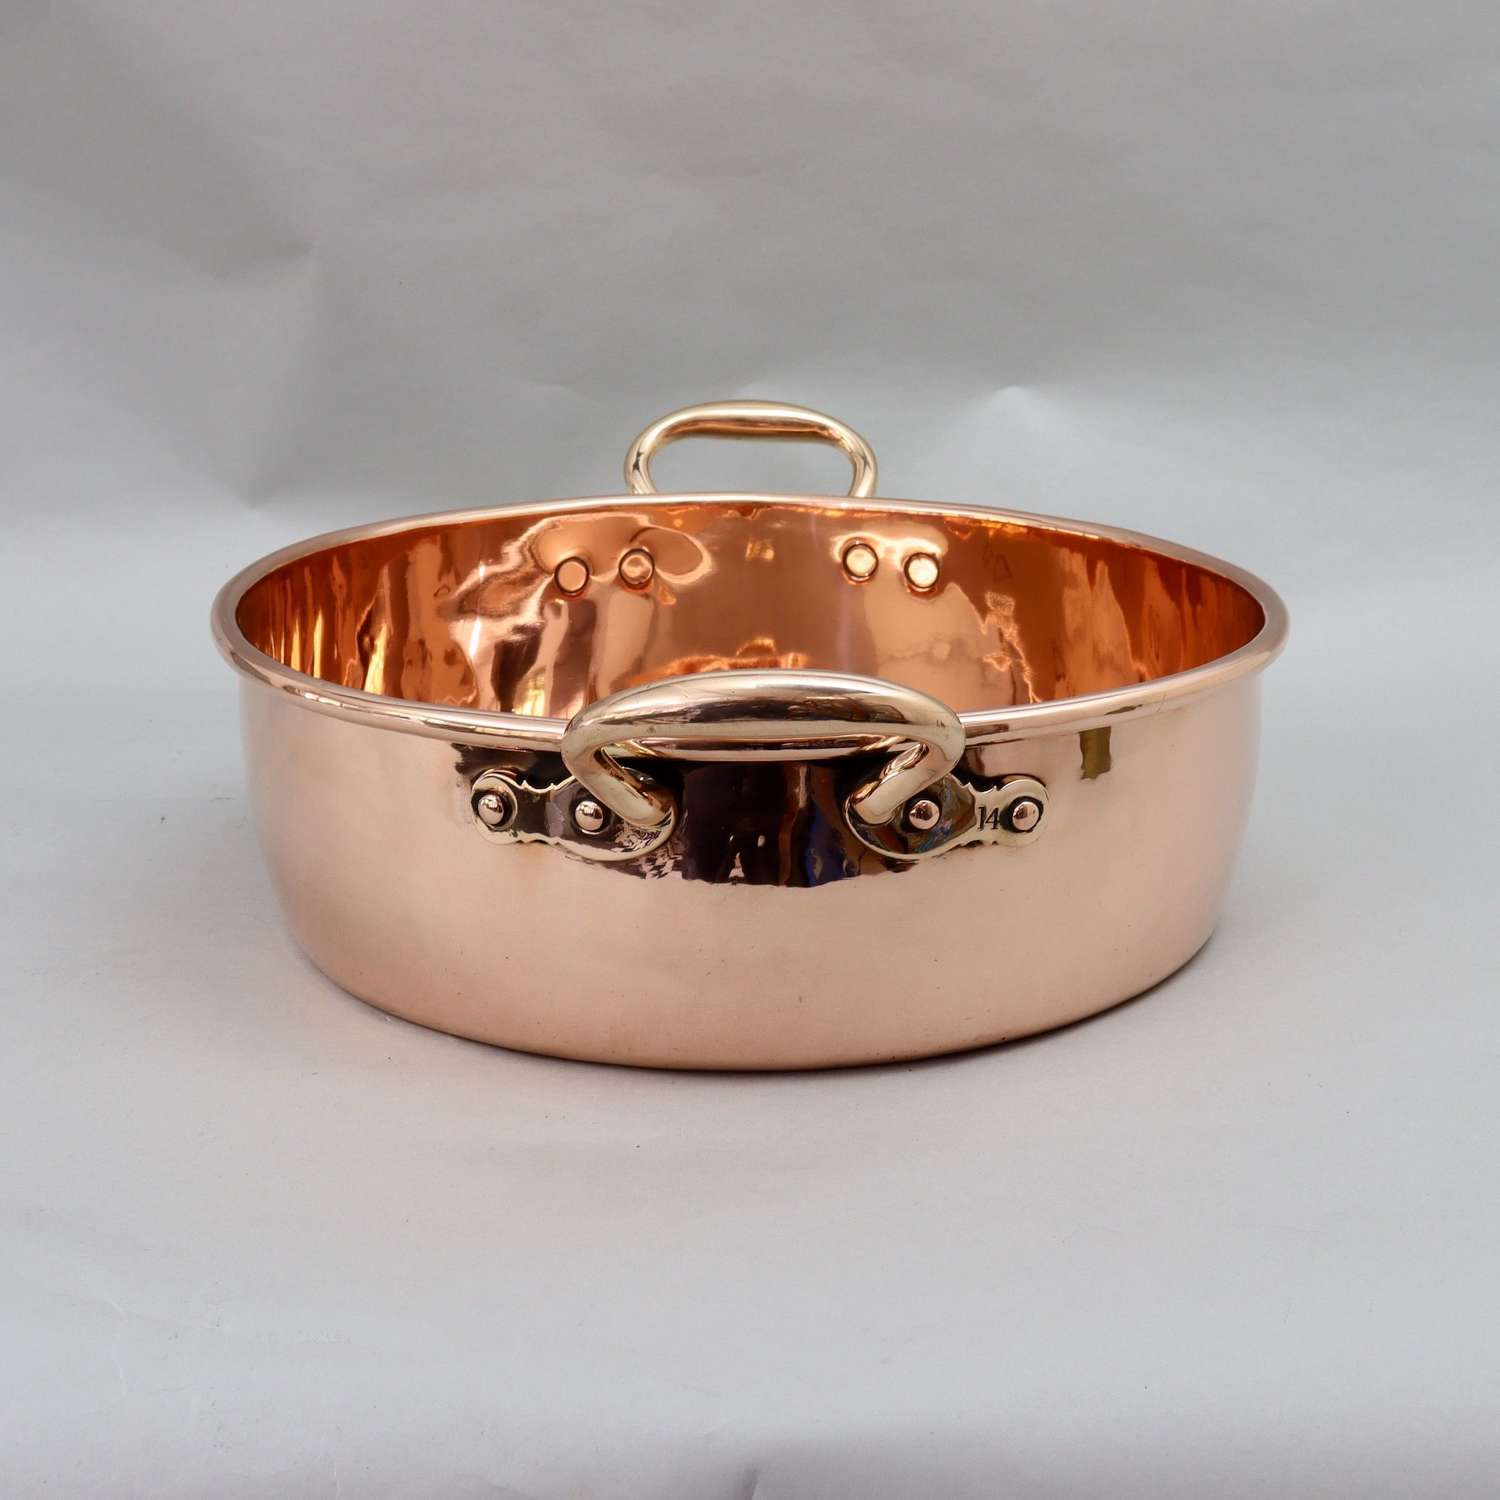 Benham's Copper Preserve Pan